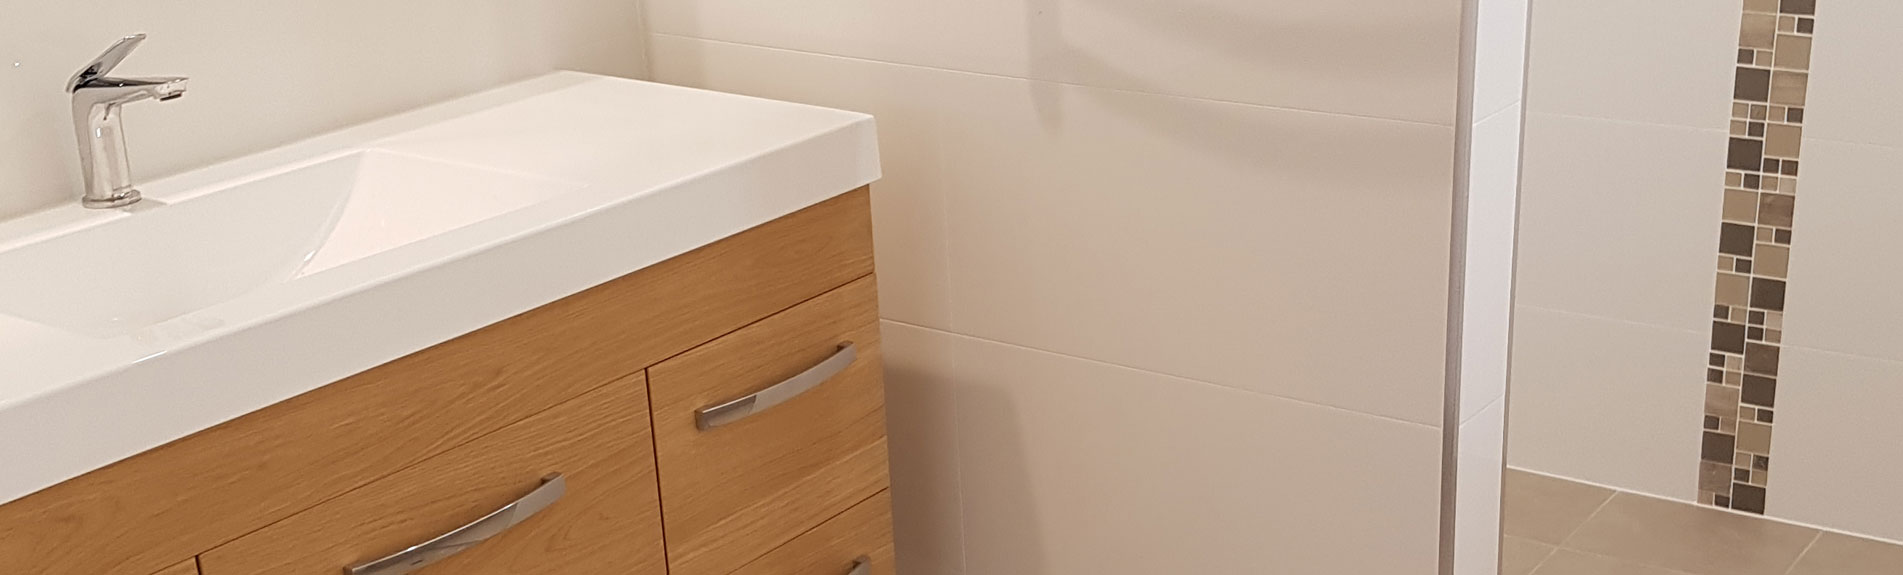 Bathroom Renovations Canberra | Small Budget Bathroom ...